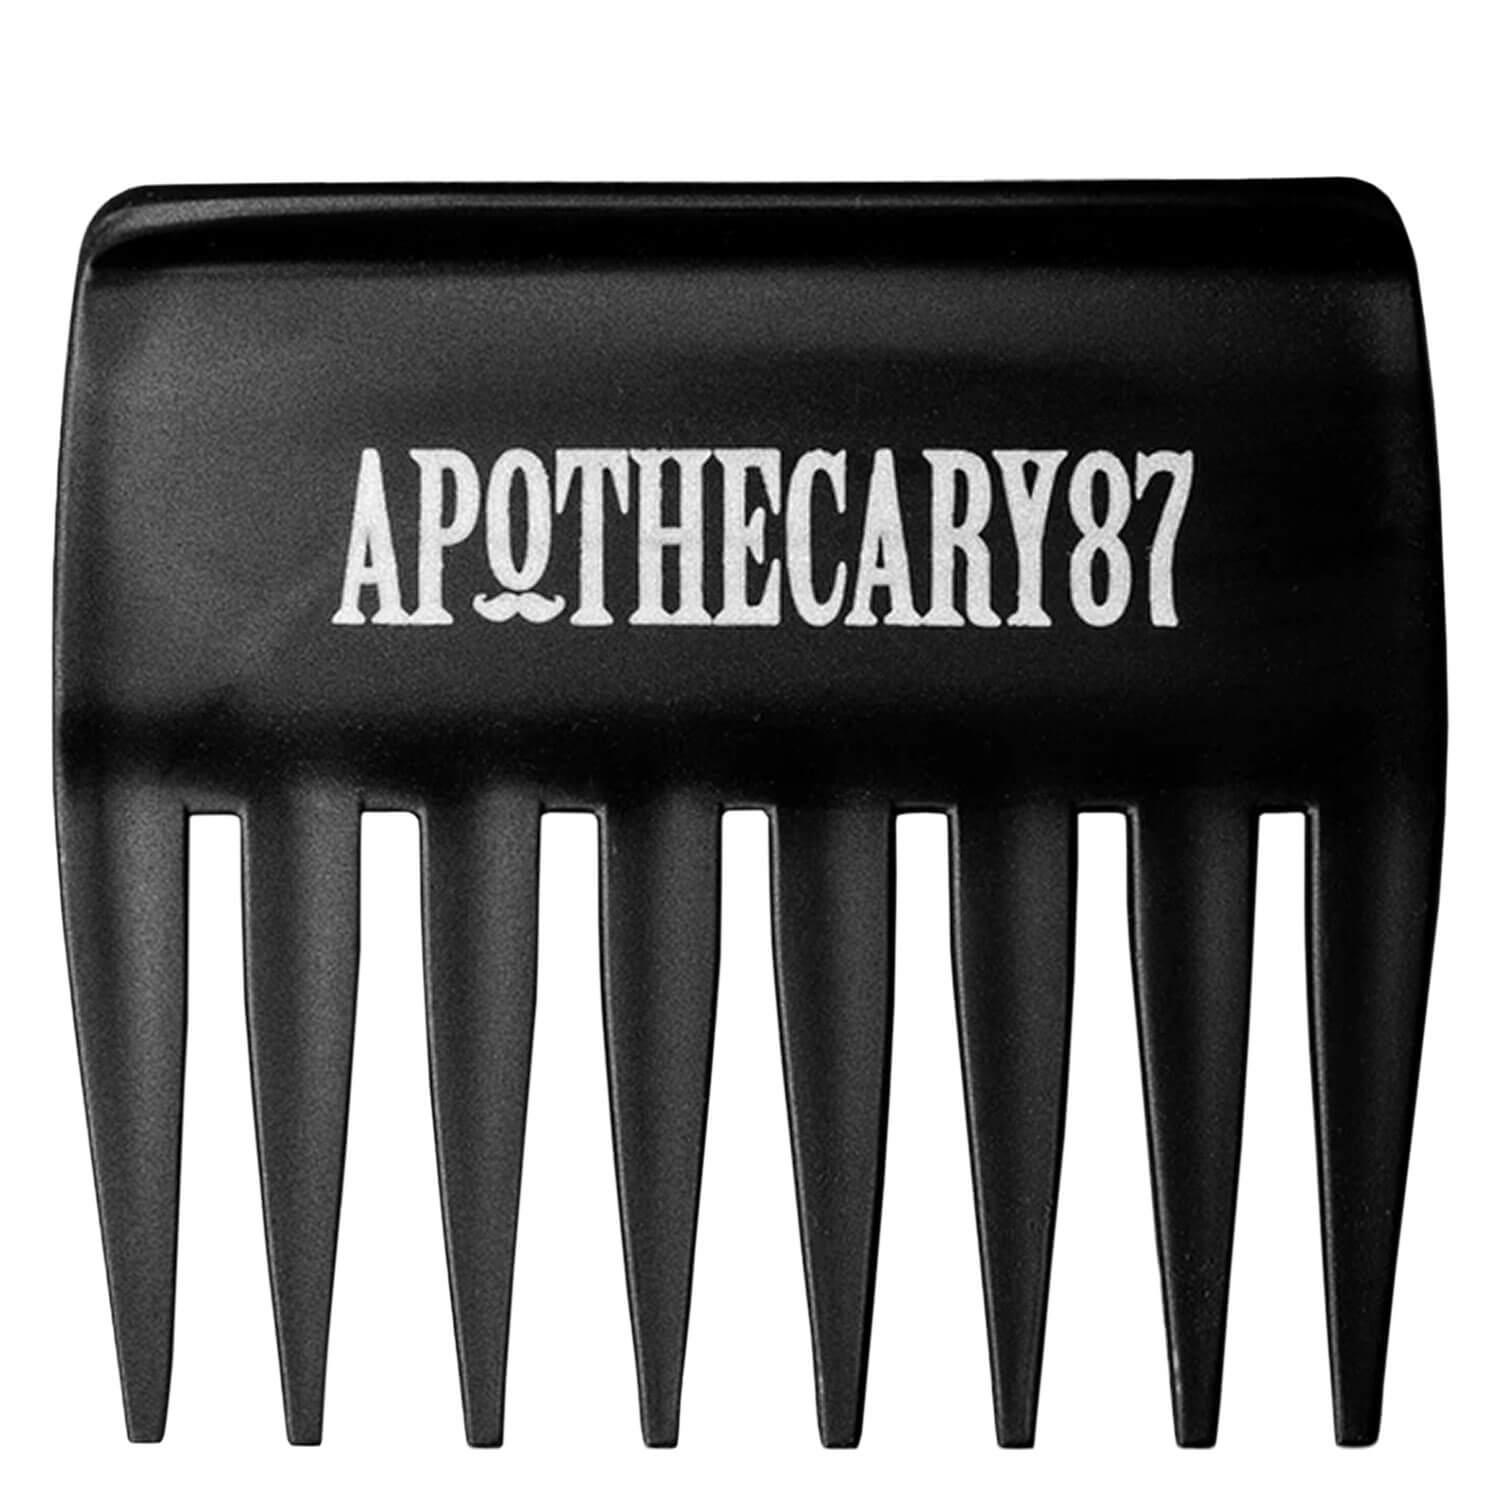 Apothecary87 Grooming - Streaker Comb Black 10cm x 9cm